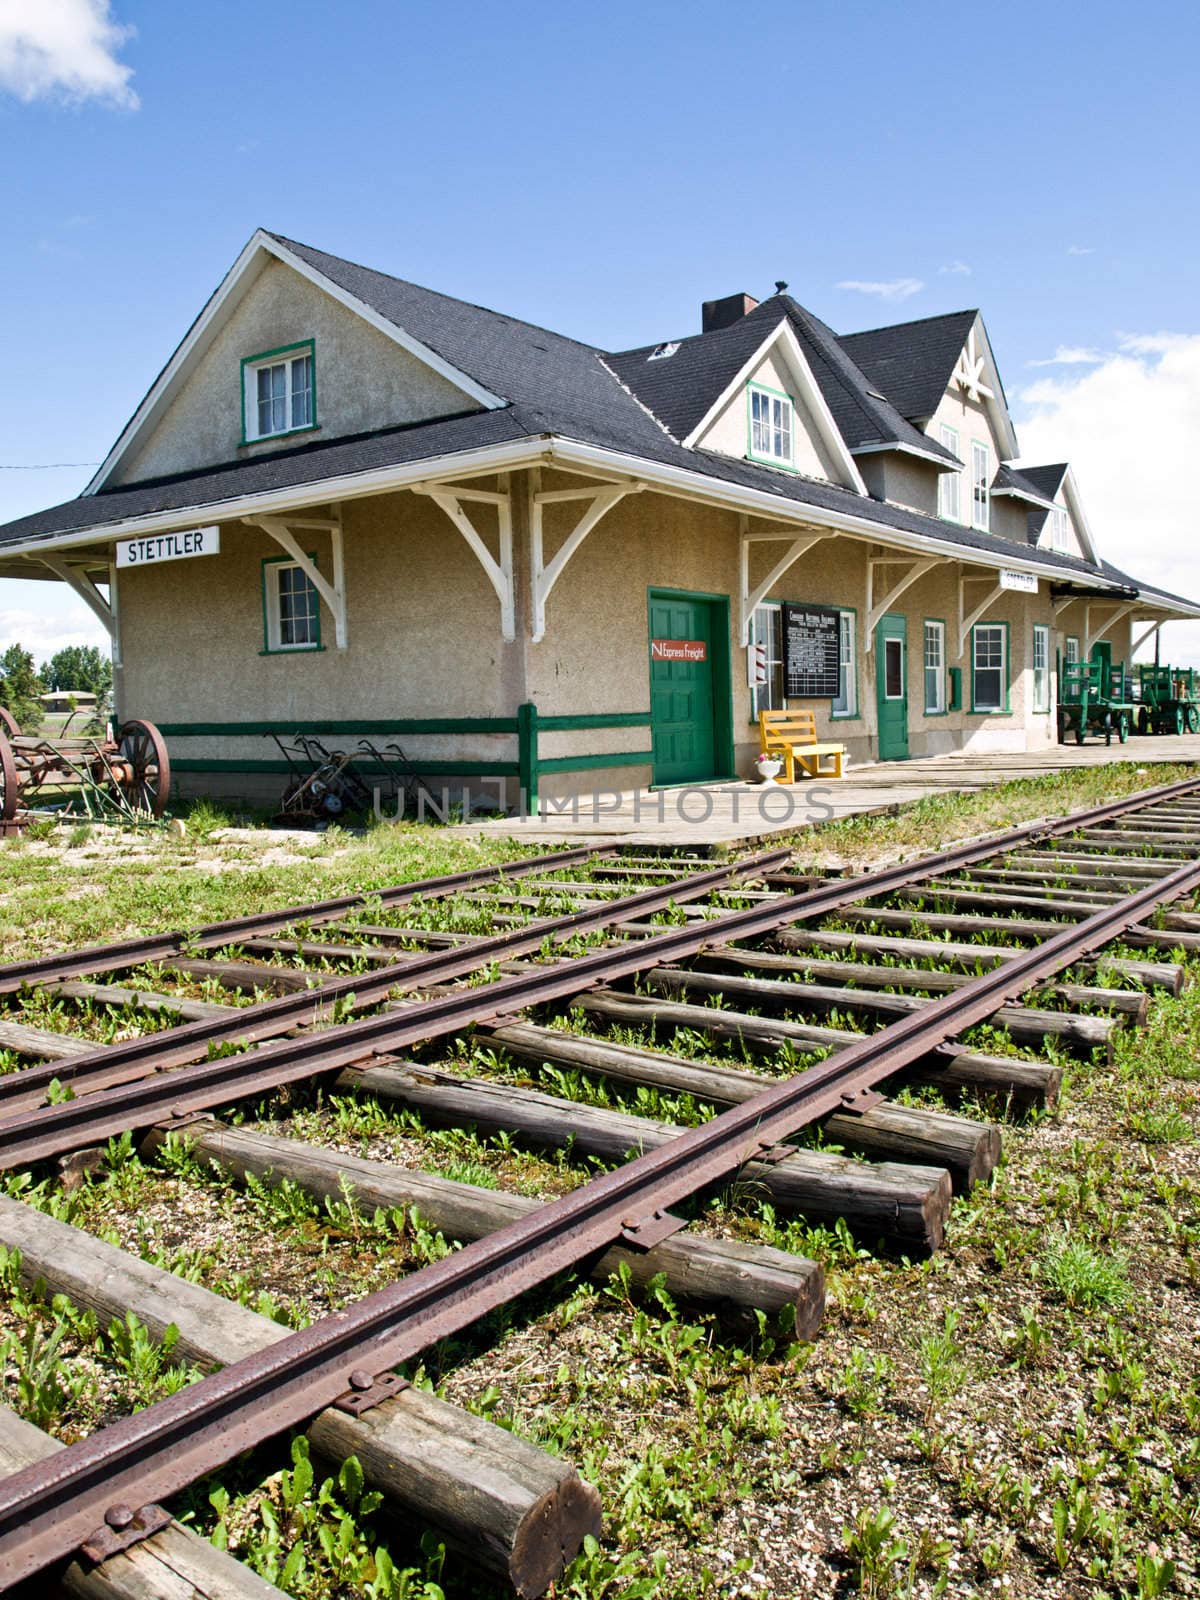 Historic train station in Stettler, Alberta, Canada.